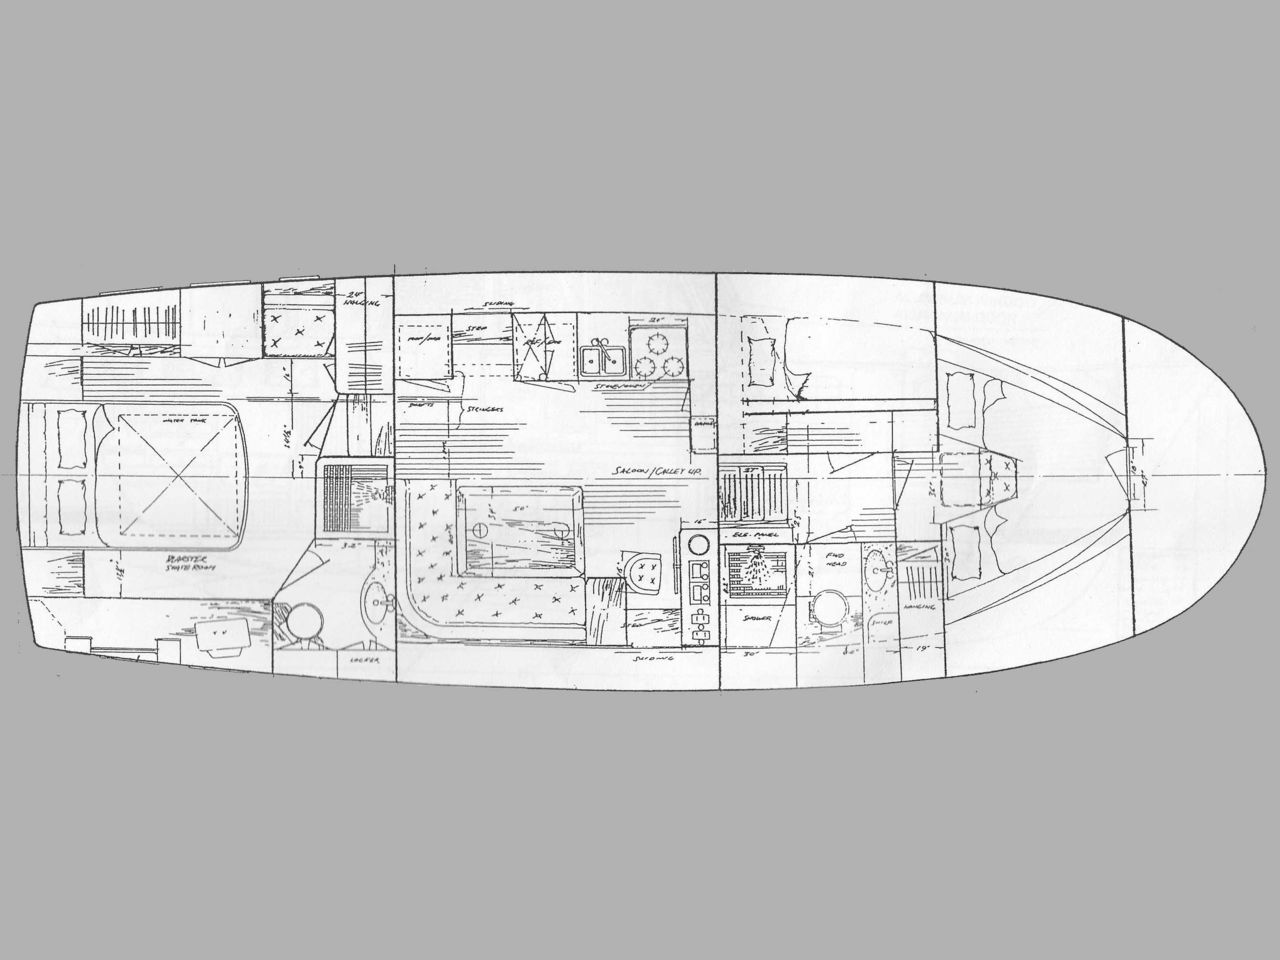 CA-Yachts Classic Adria Trawler - immagine 3